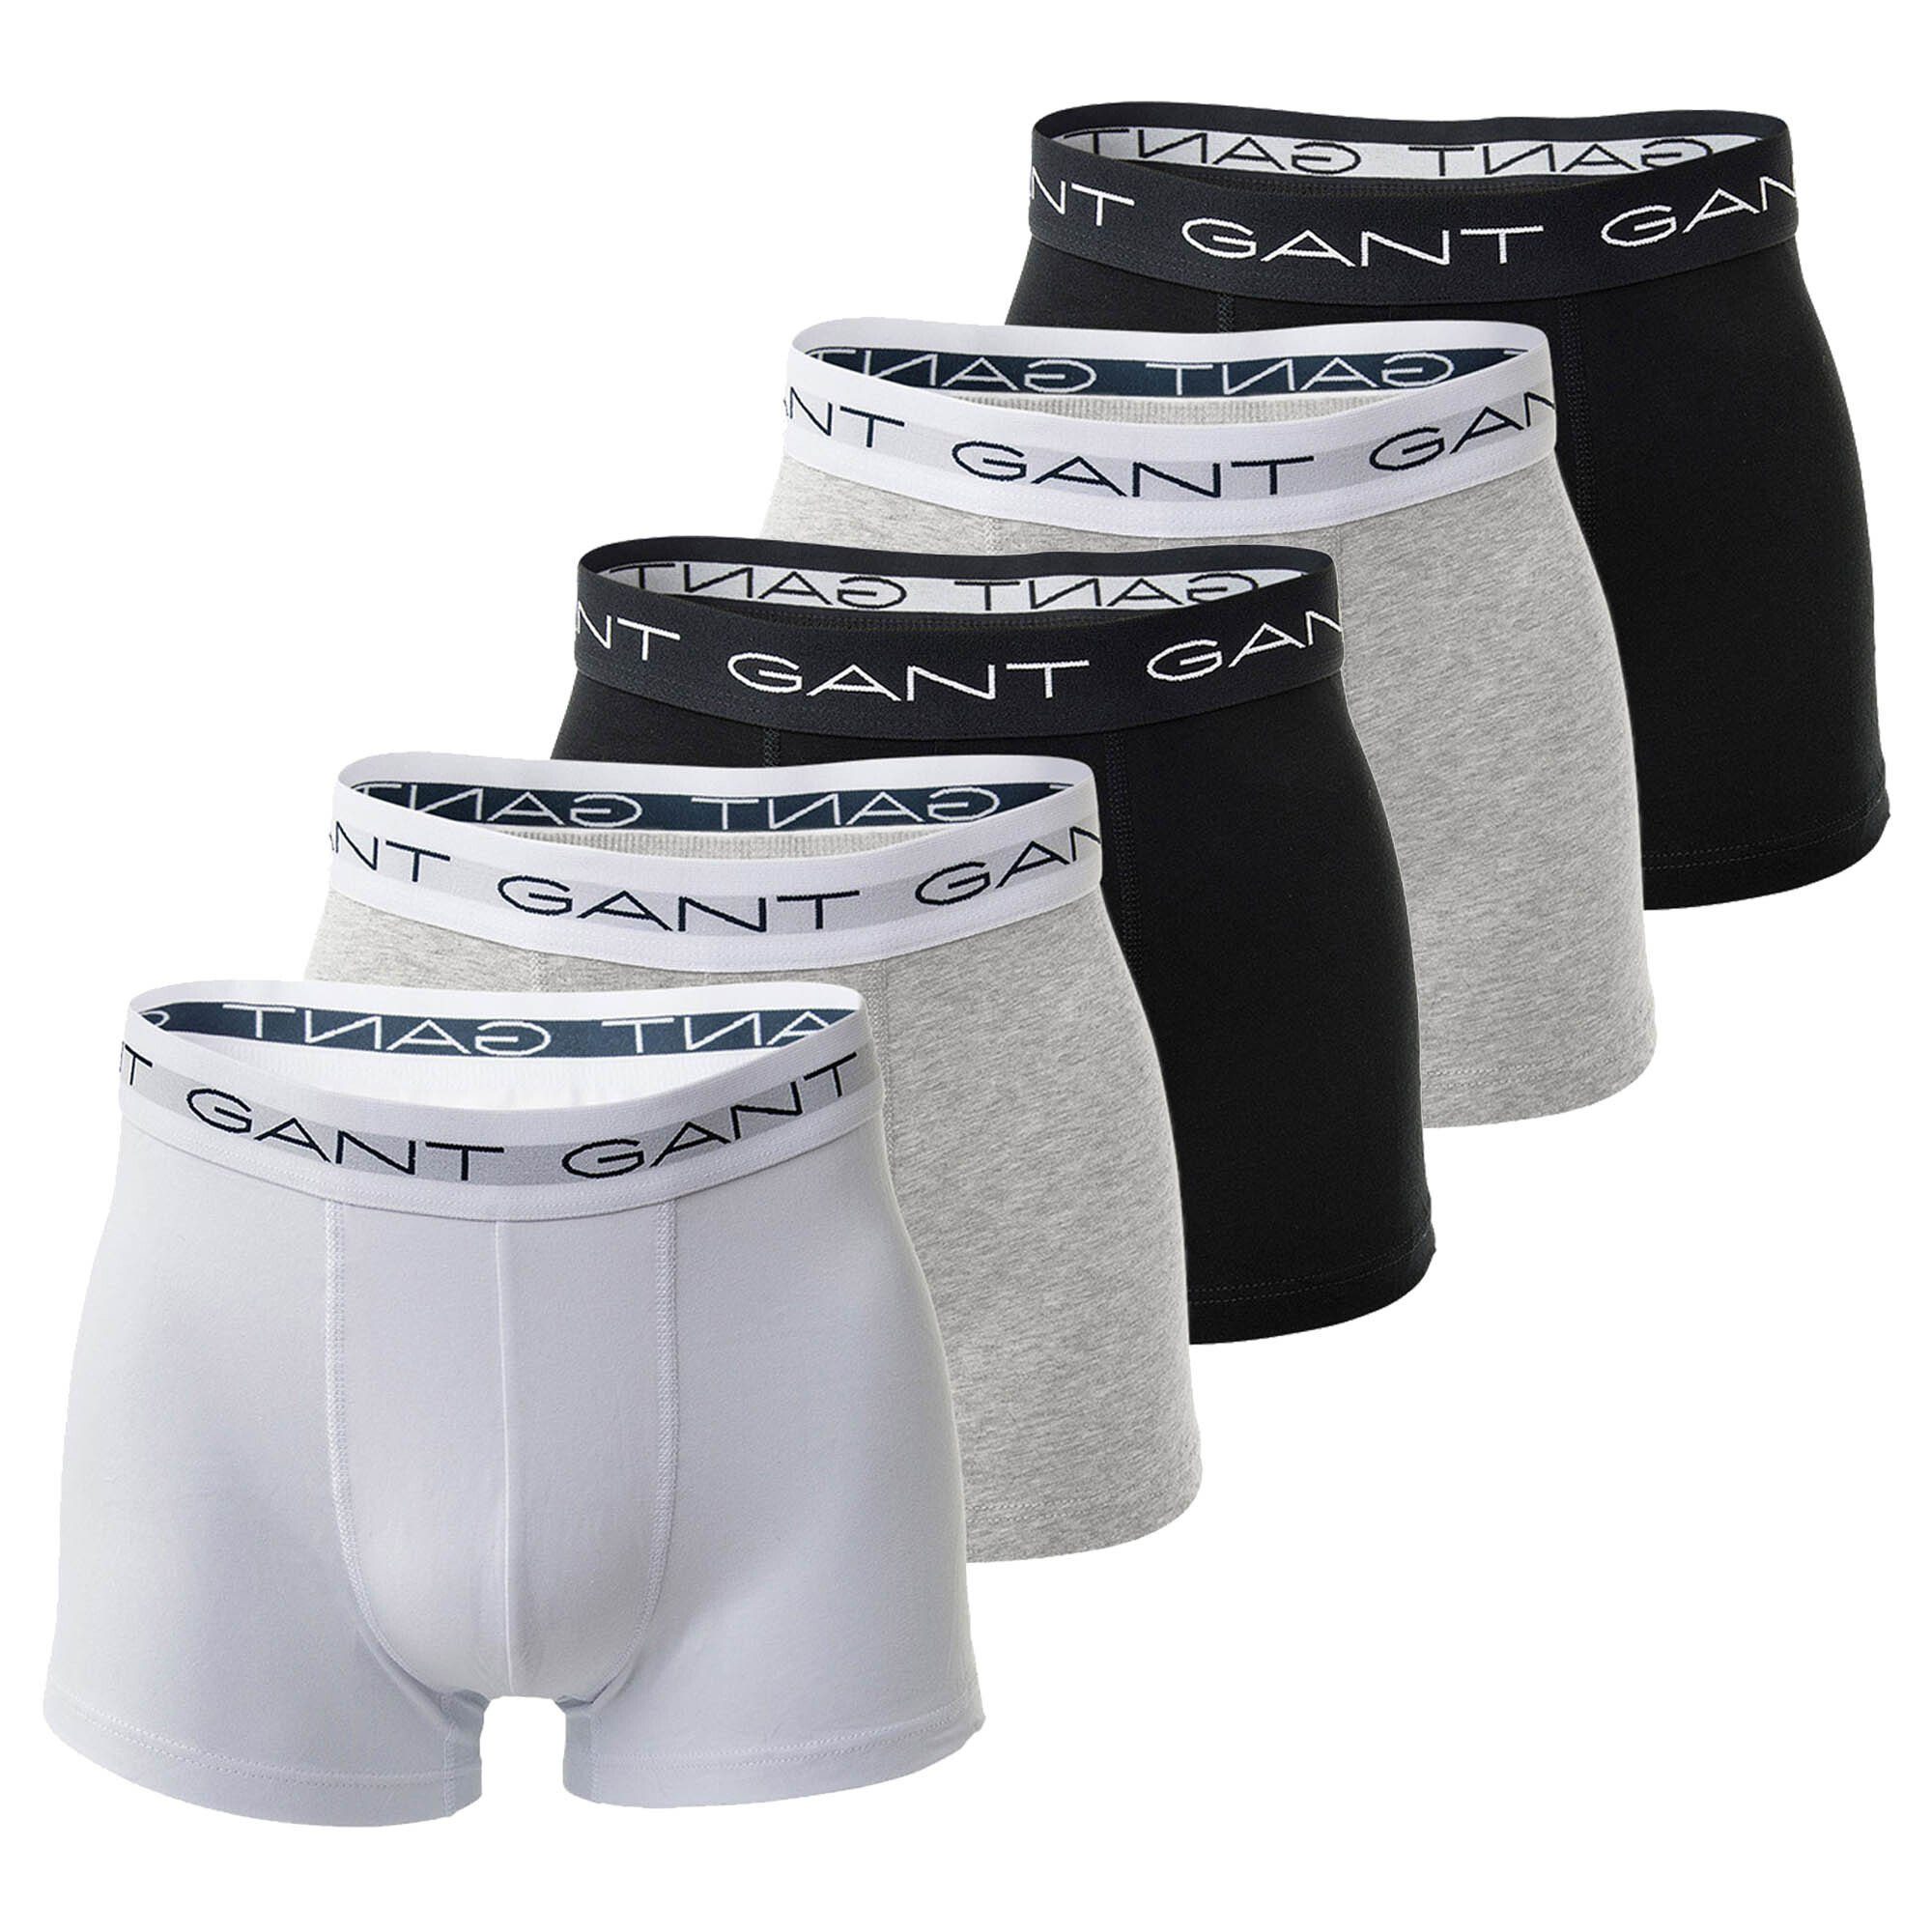 Gant Boxer Herren Boxershorts, 5er Pack - Basic Trunks Schwarz/Grau/Weiß